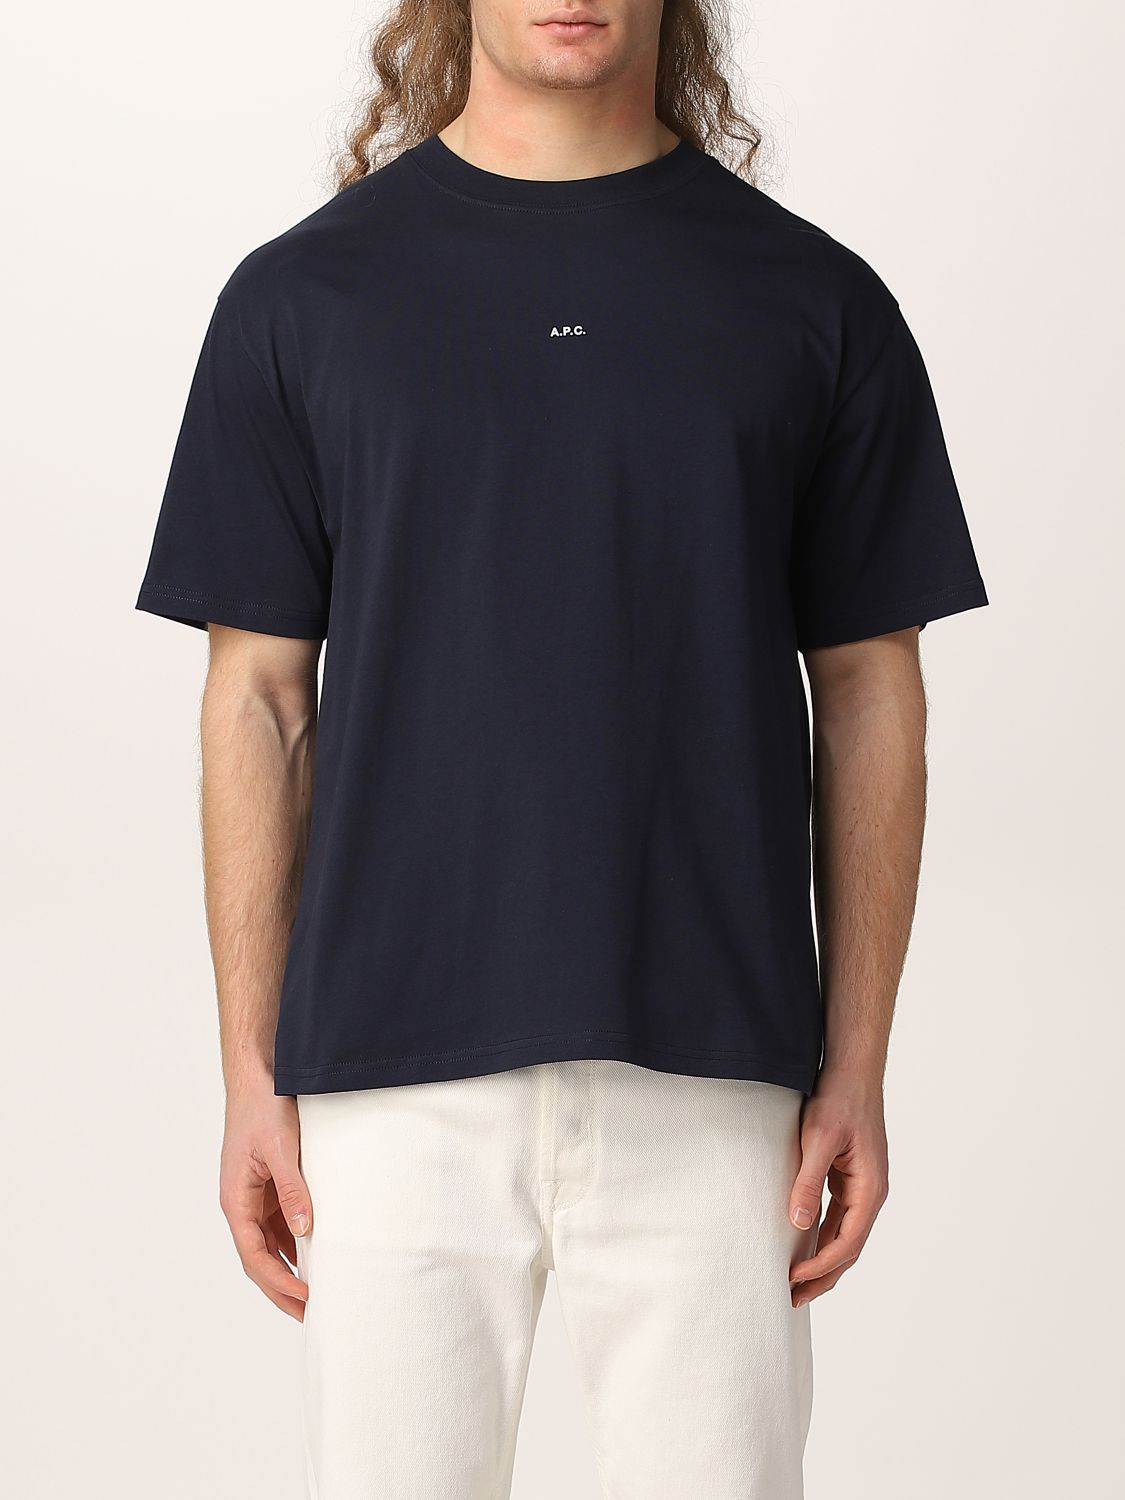 A.P.C.: cotton jersey T-shirt with mini logo - Blue | A.p.c. t-shirt ...